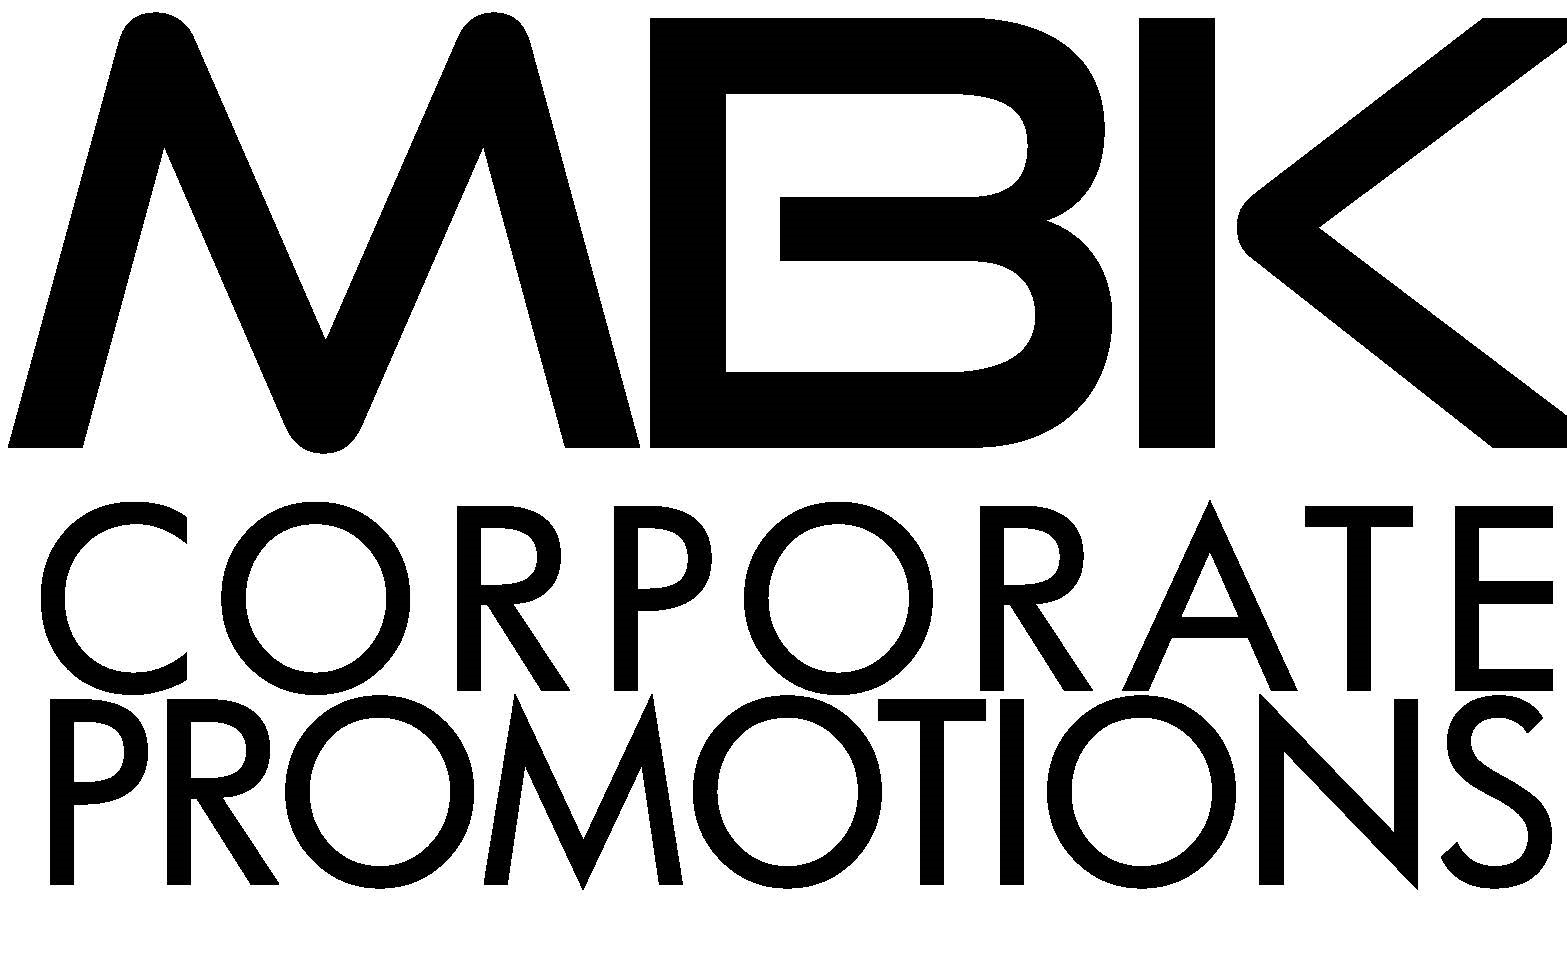 MBK Full Logo crop - New.jpg